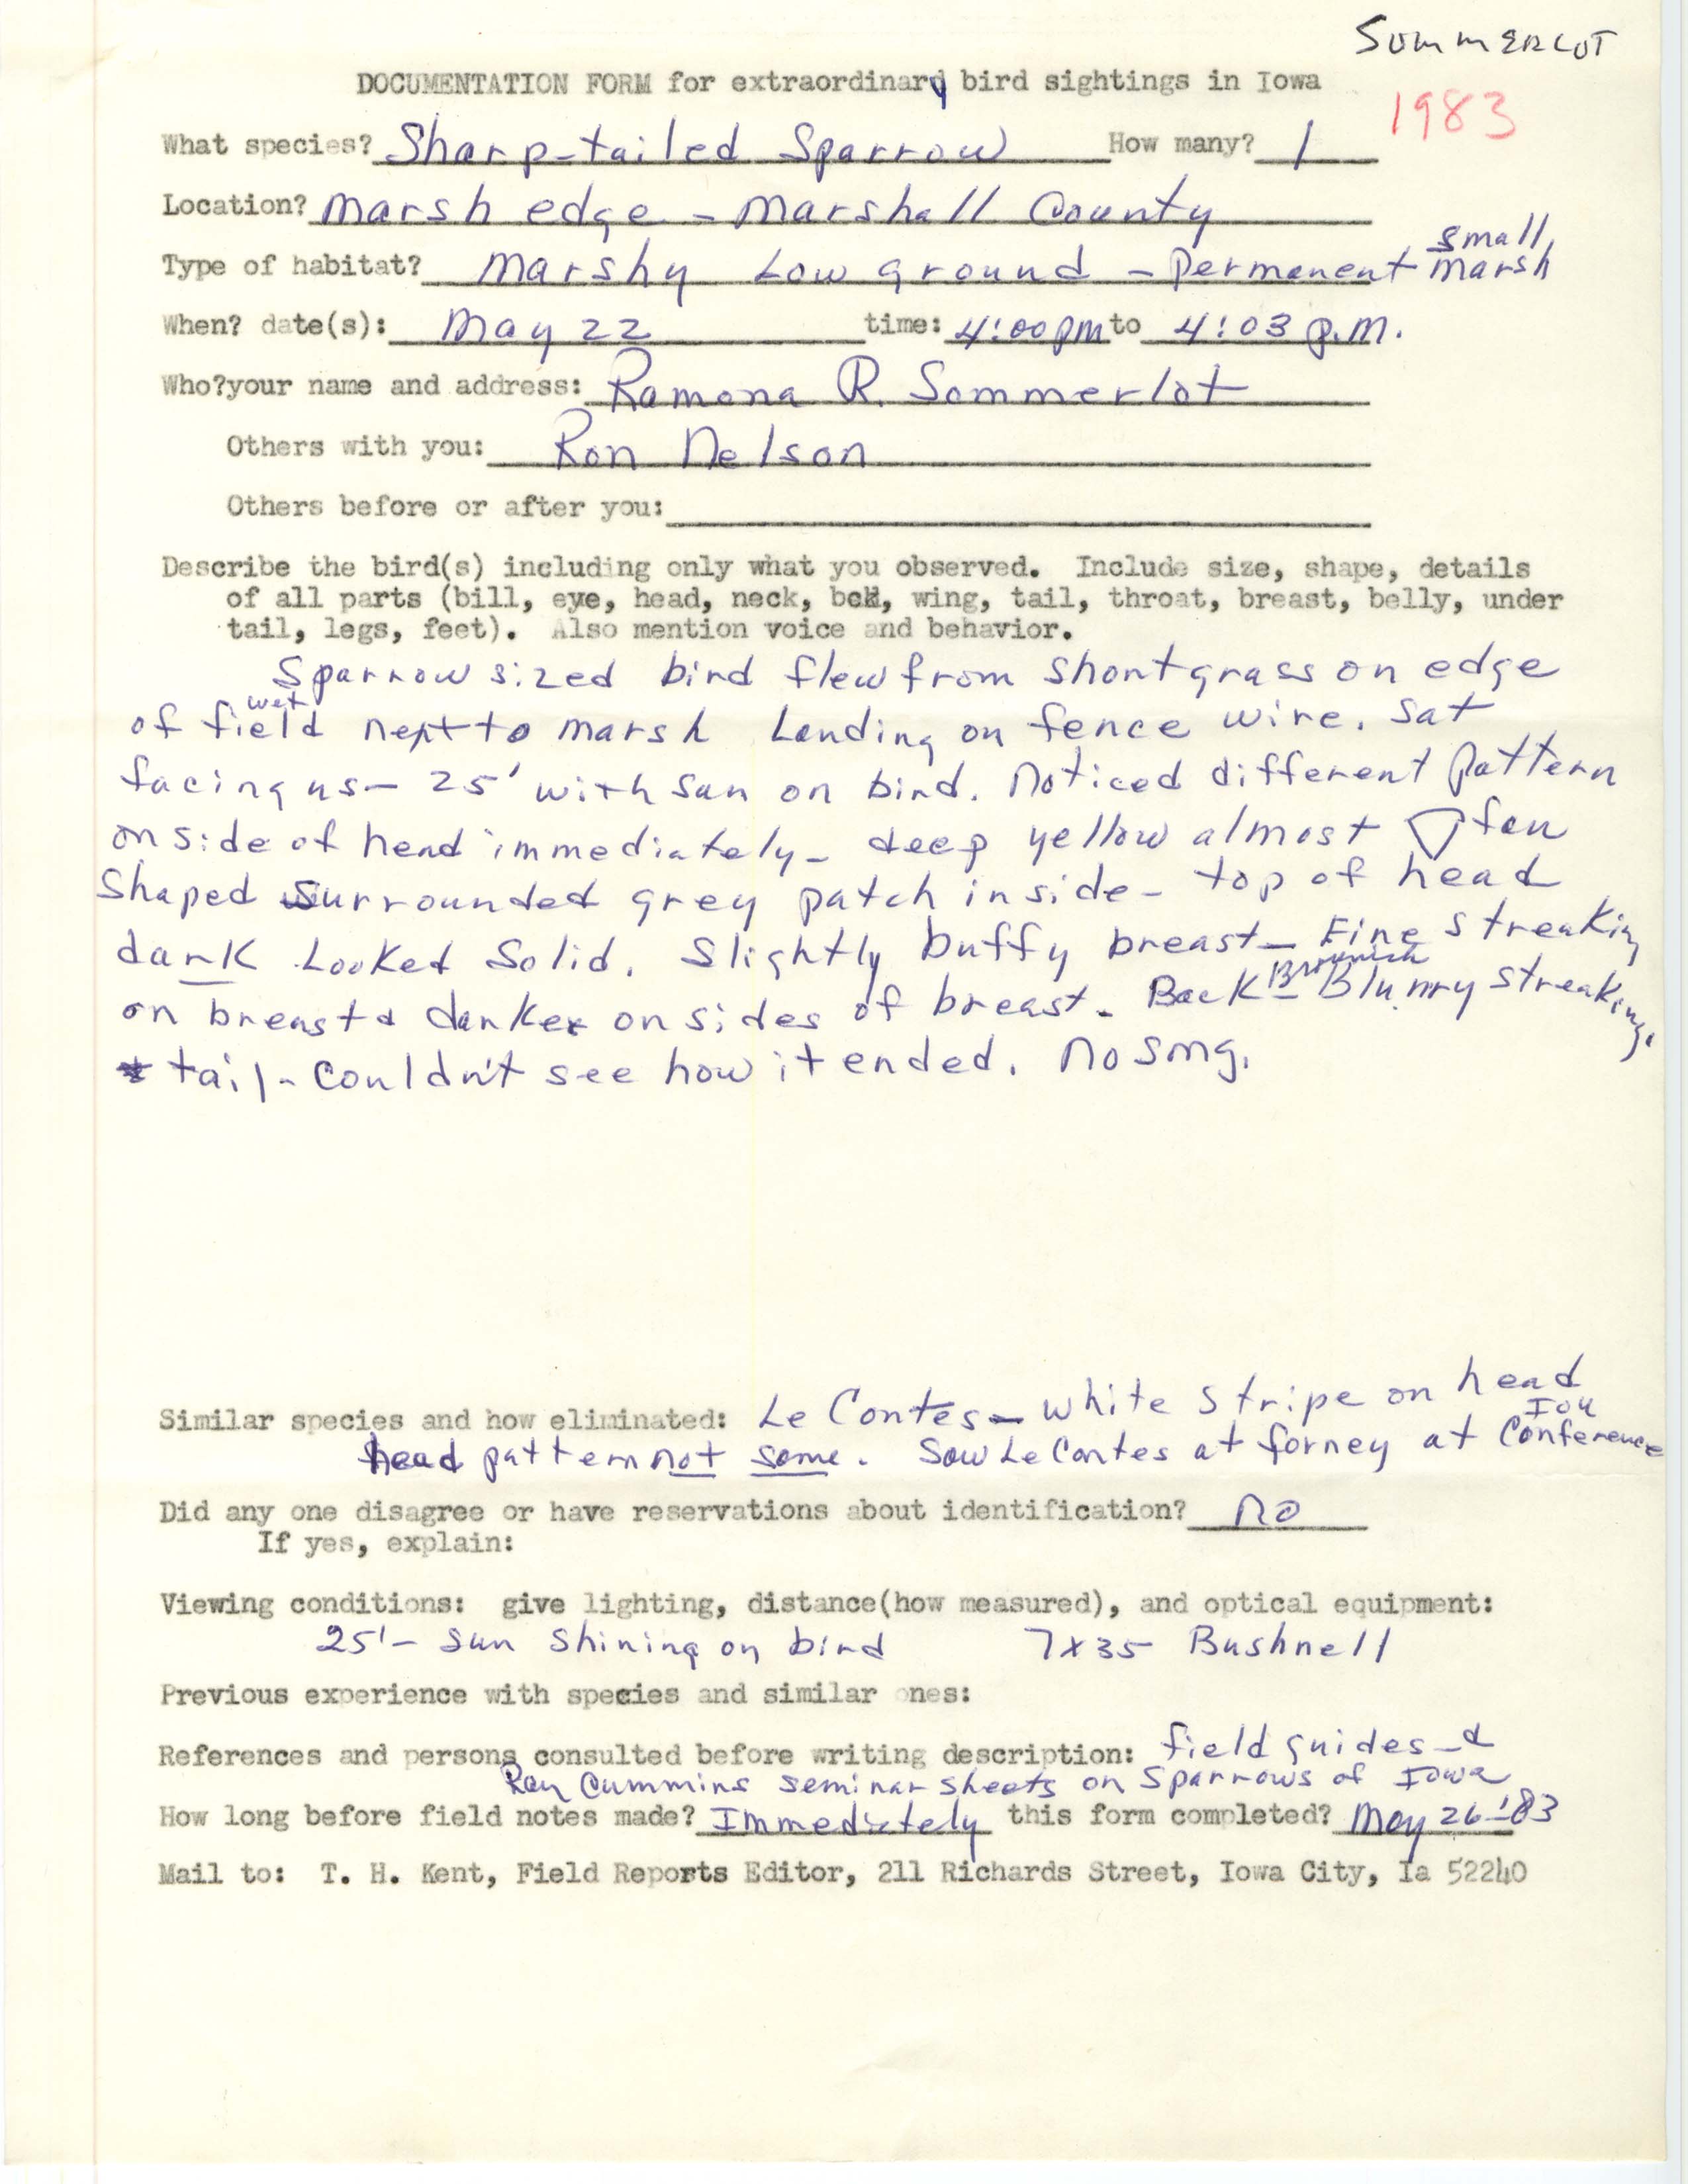 Rare bird documentation form for Sharp-tailed Sparrow at Marshall County, 1983